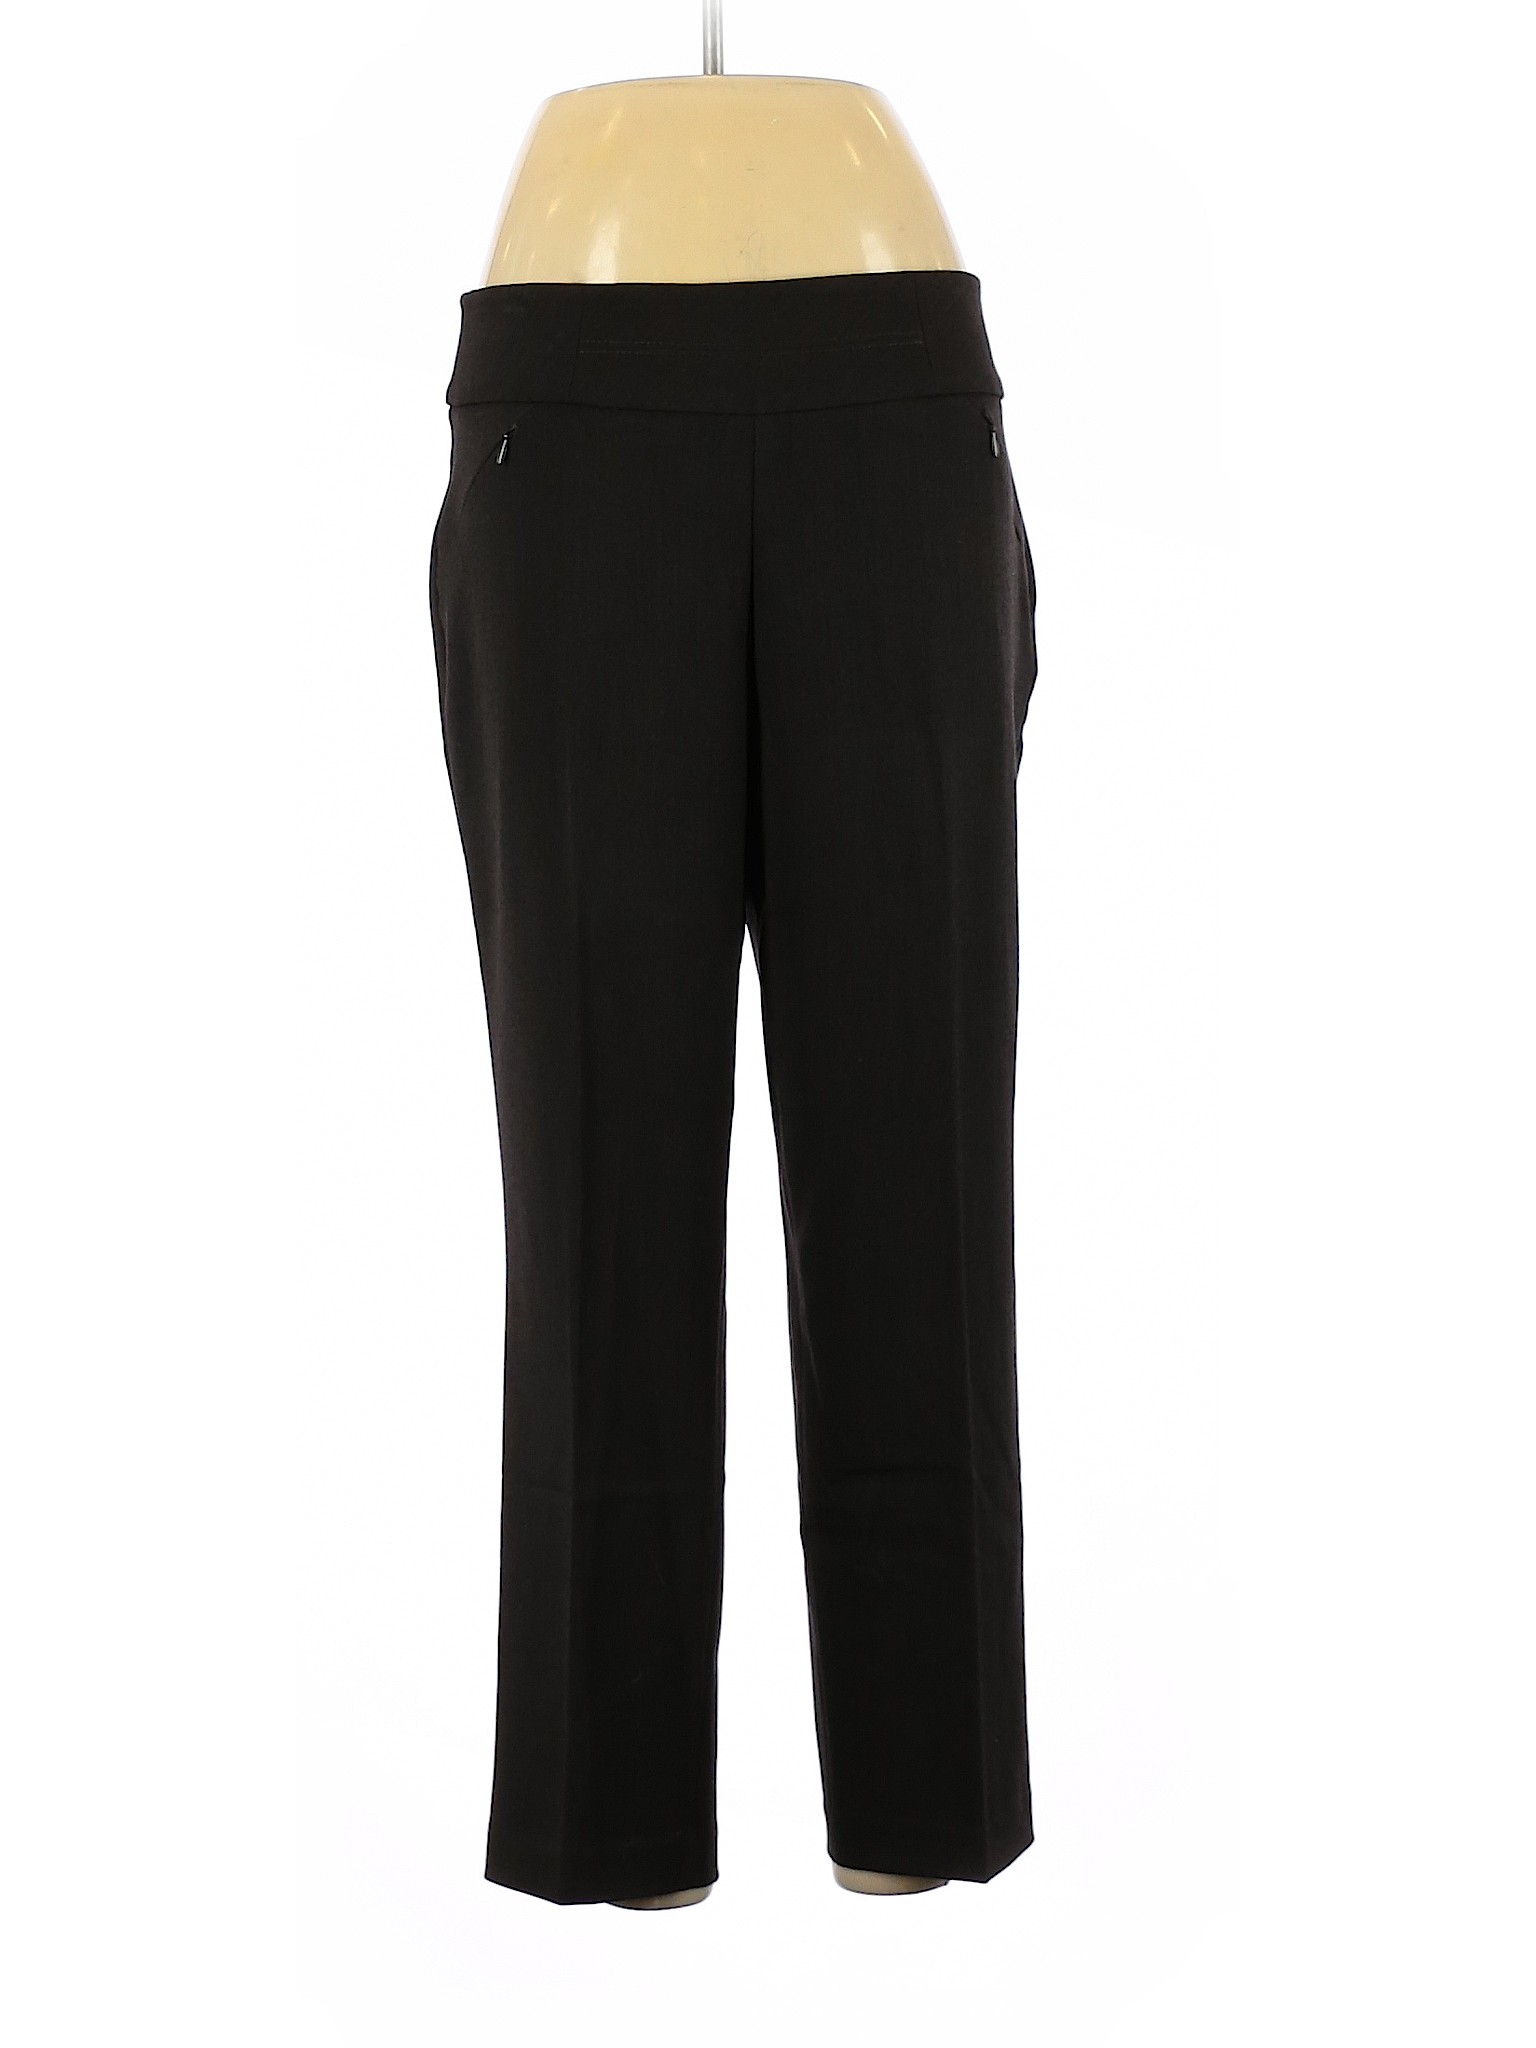 Investments Women Black Dress Pants 8 Petites | eBay